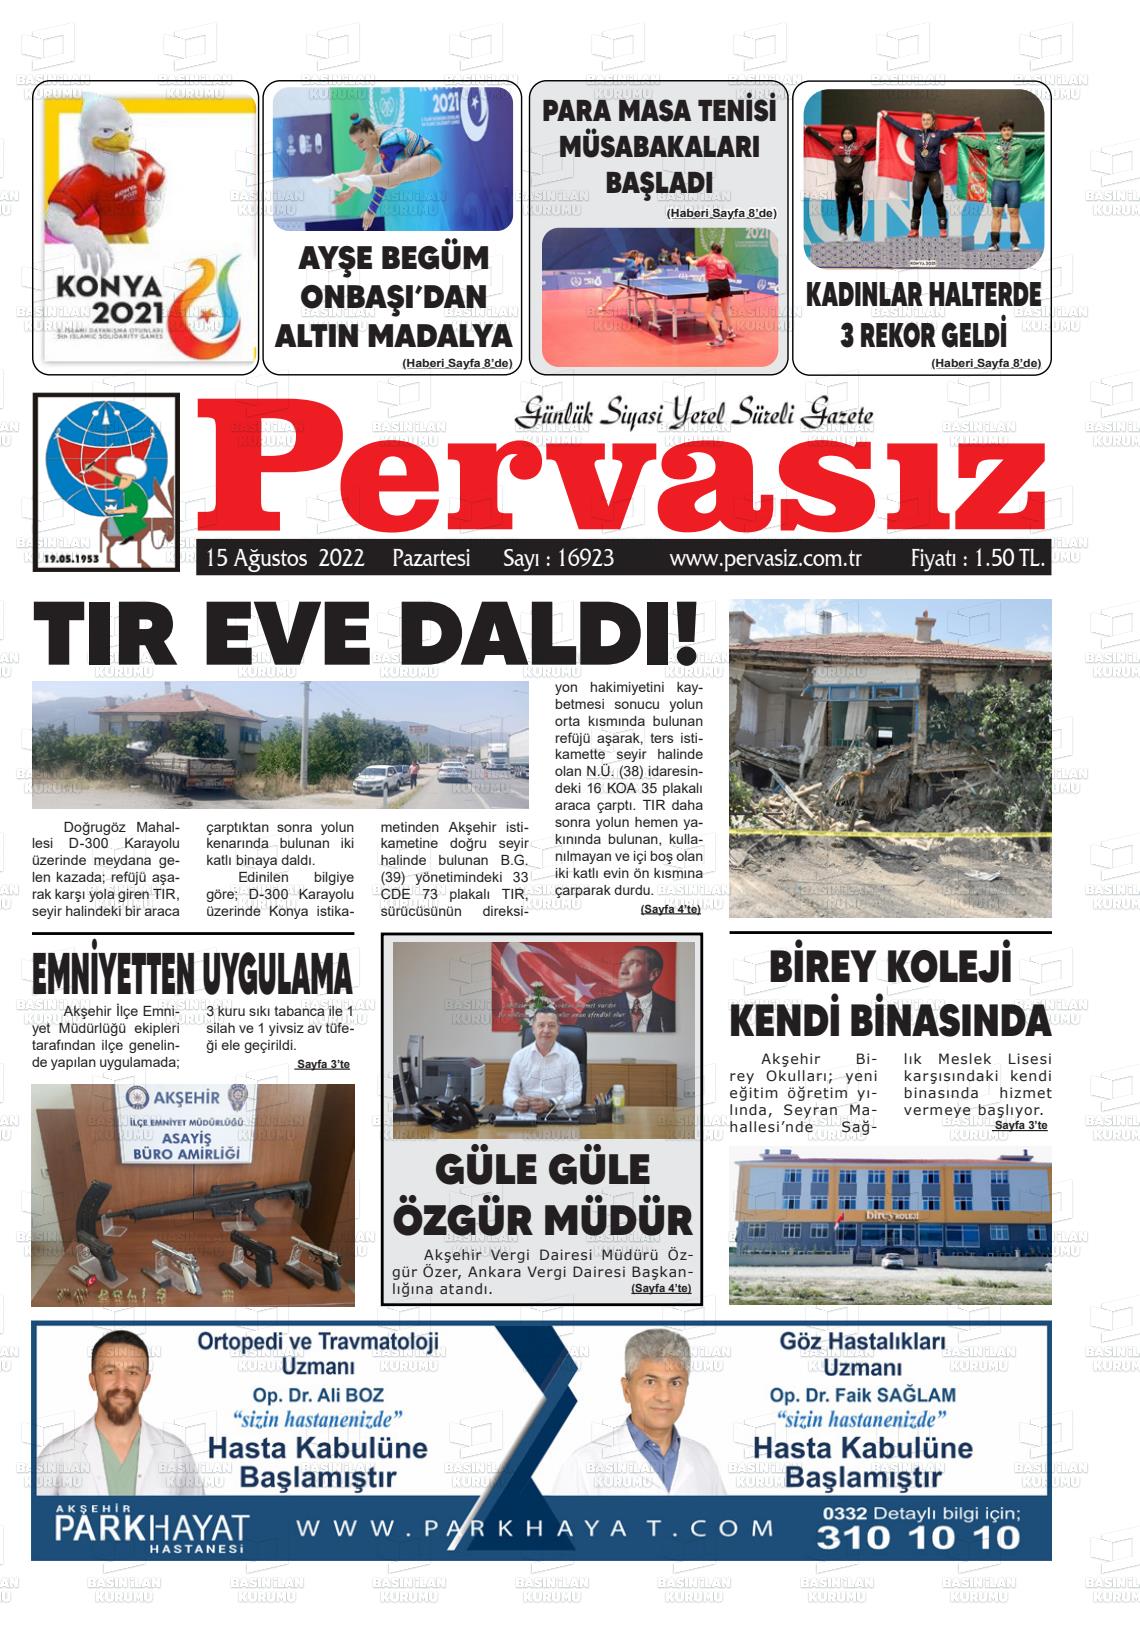 15 Ağustos 2022 Konya Pervasız Gazete Manşeti